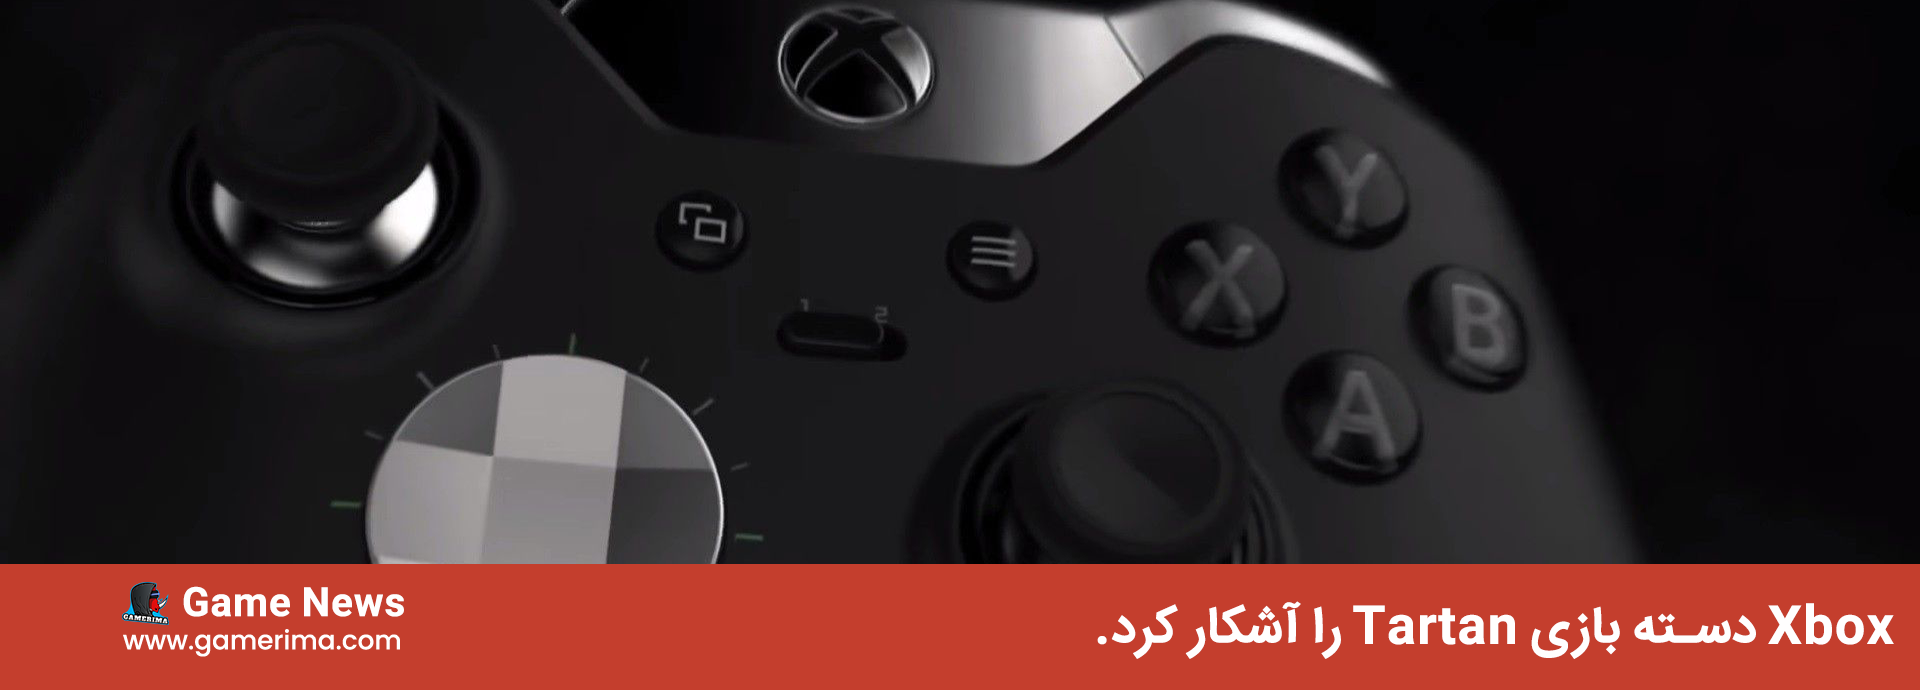 Xbox دسته بازی Tartan را آشکار کرد.